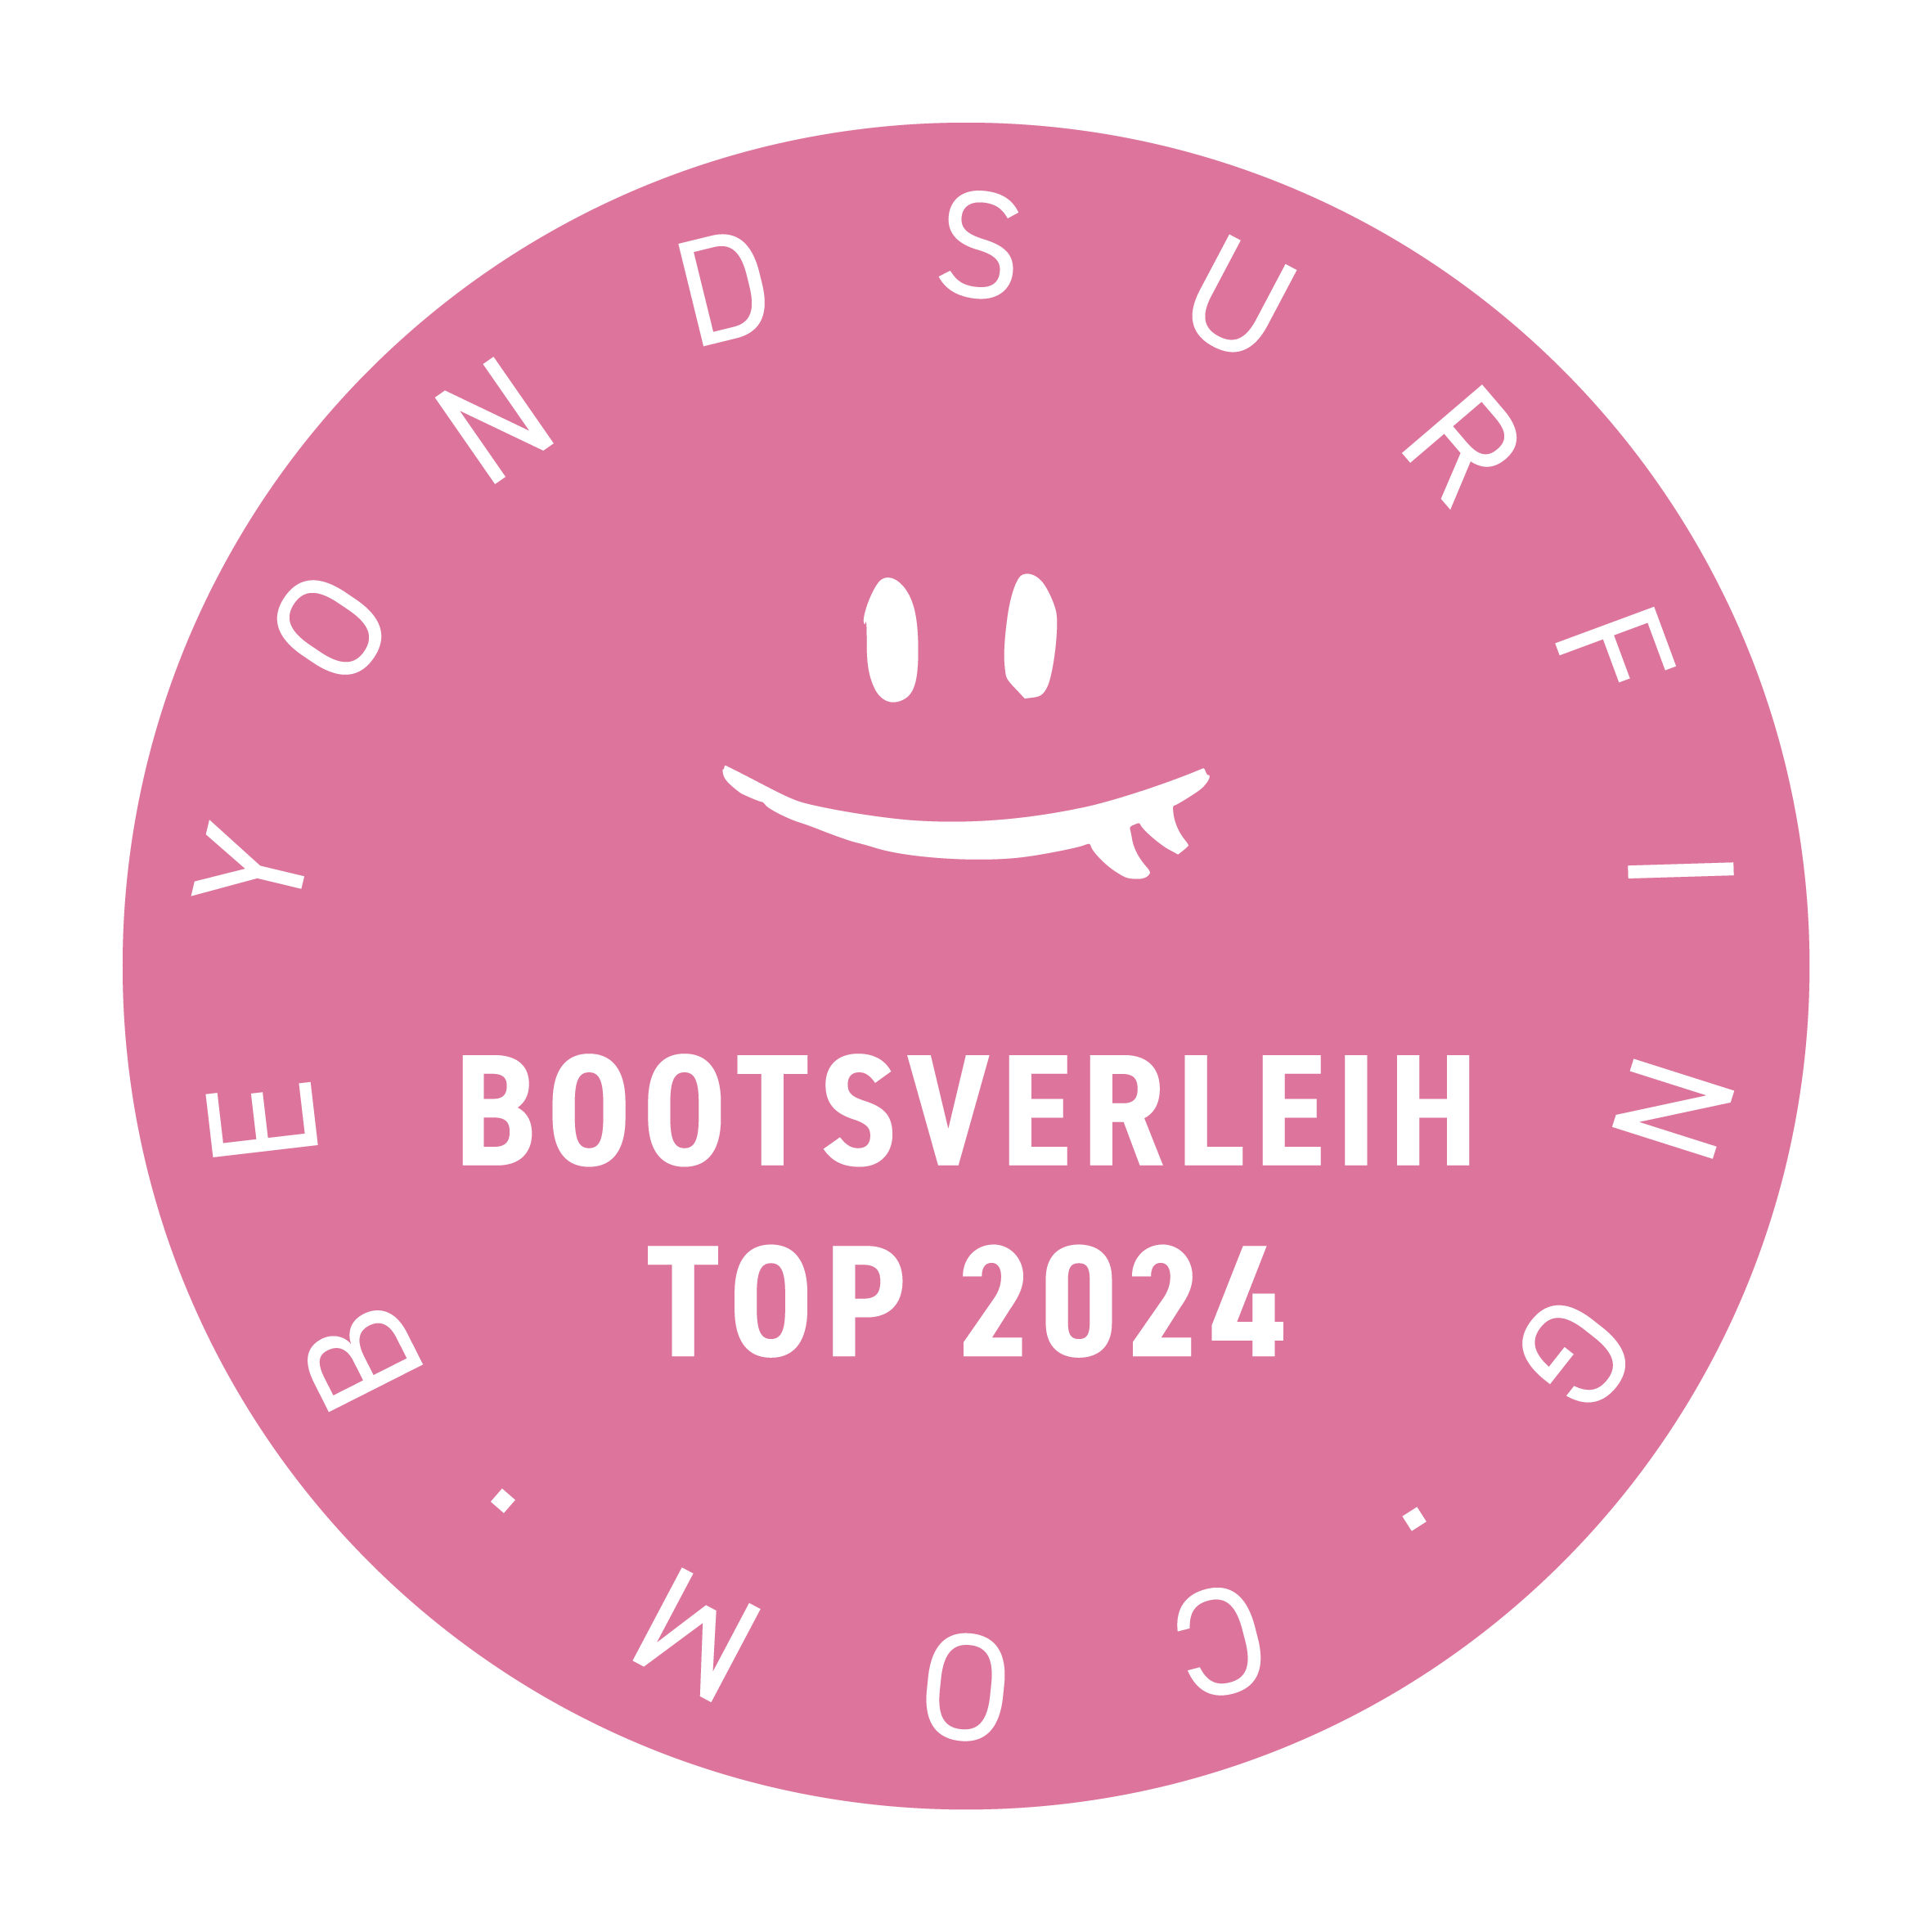 BeyondSurfing Bootsverleih Award